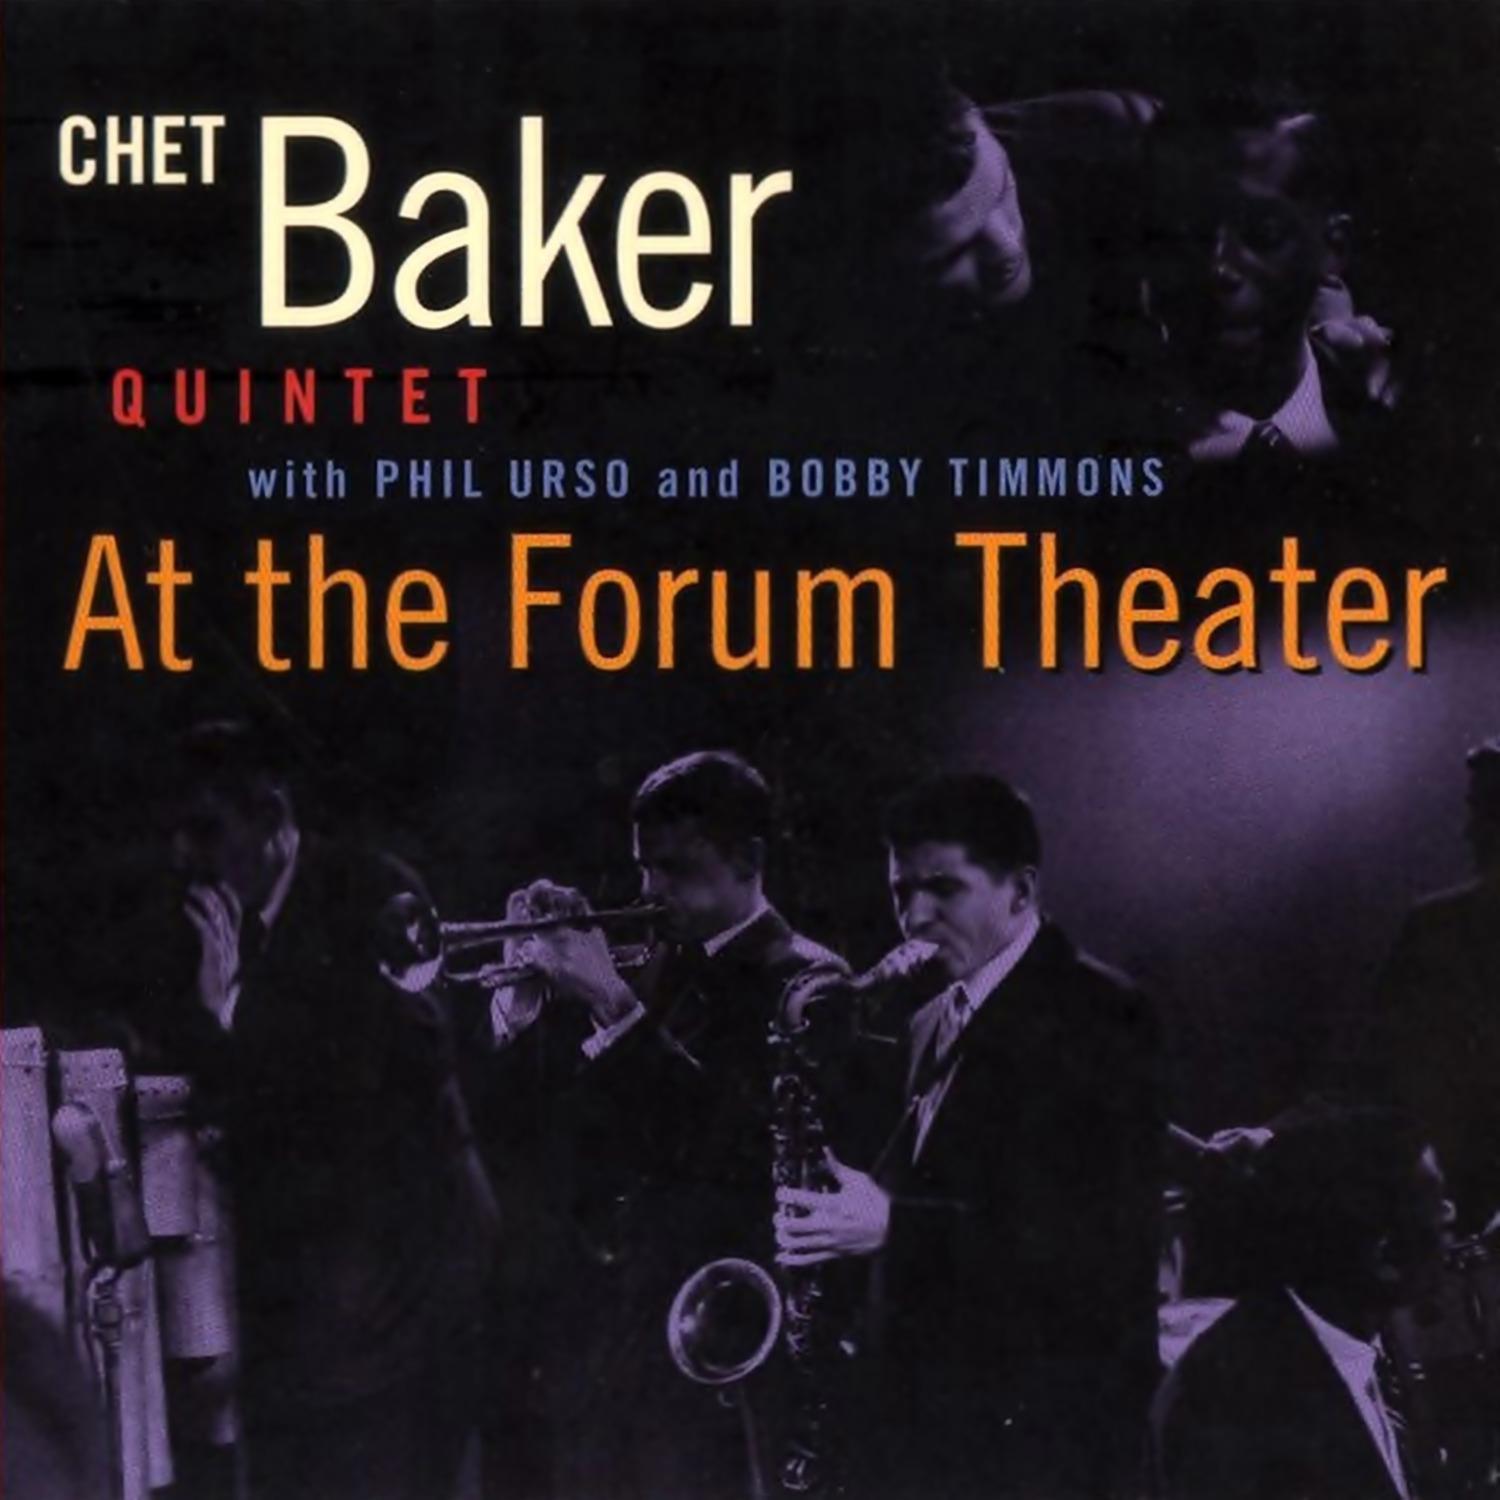 Chet Baker Quintet - Extra Mild (Live) [feat. Phil Urso & Bobby Timmons]